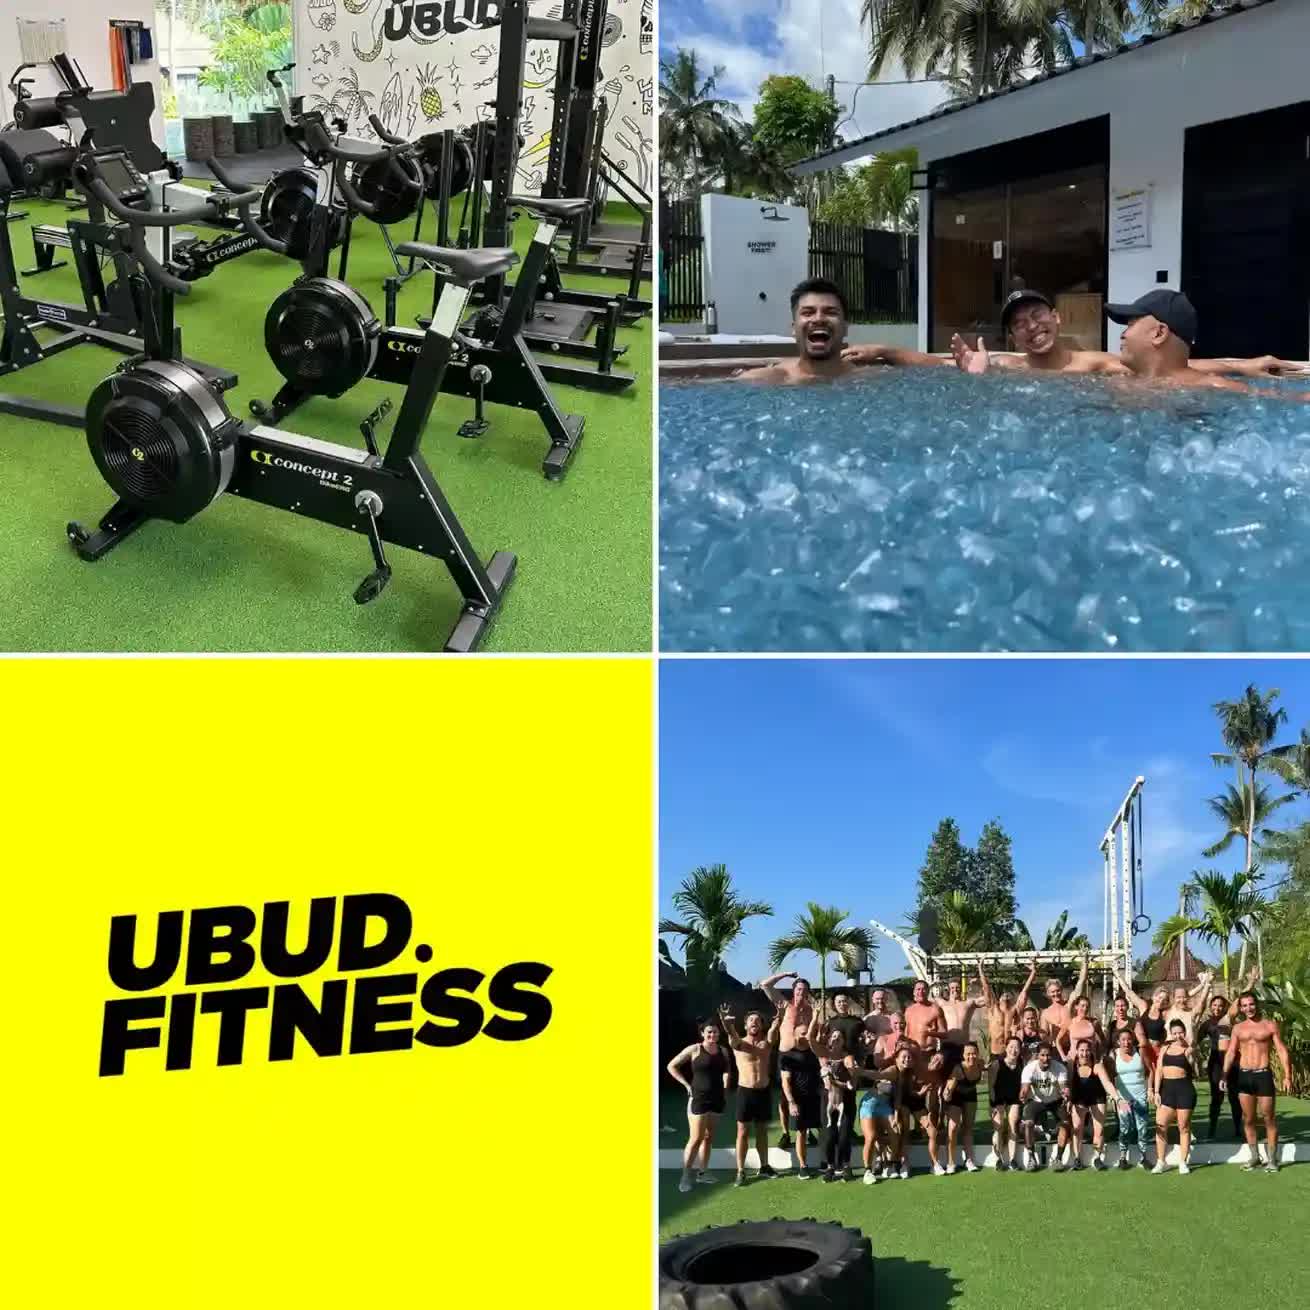 Ubud Fitness Center collage of photos